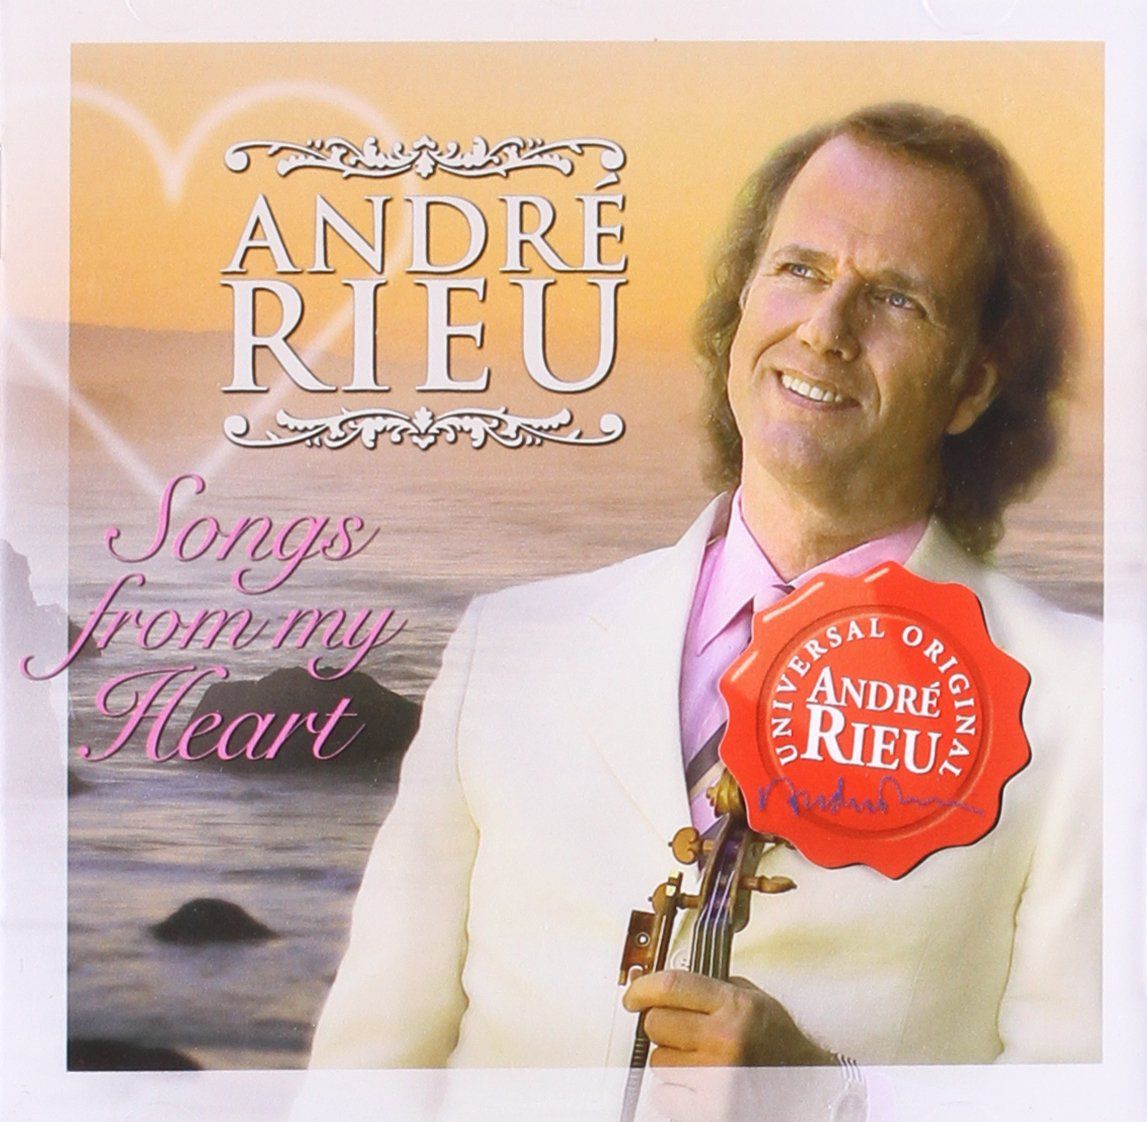 Песни 2005 зарубежные. Андре рьё. Andre Rieu обложка на CD. Andre Rieu обложка на компакт дисках. The second Waltz André Rieu.